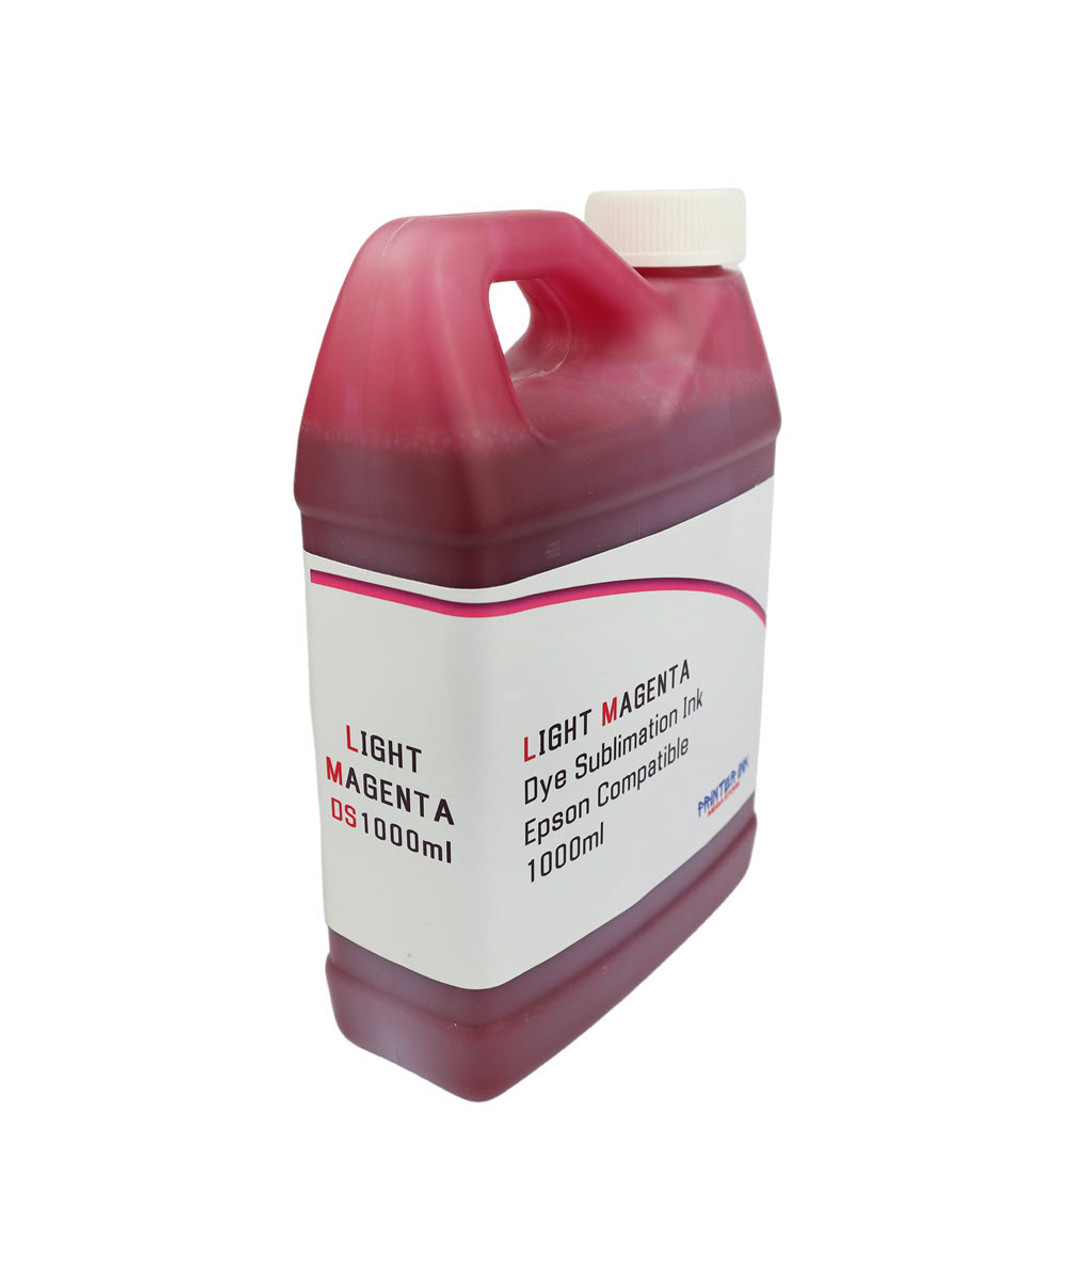 Light Magenta Epson Stylus Pro 4880 Printer Dye Sublimation Ink 1000ml Bottle